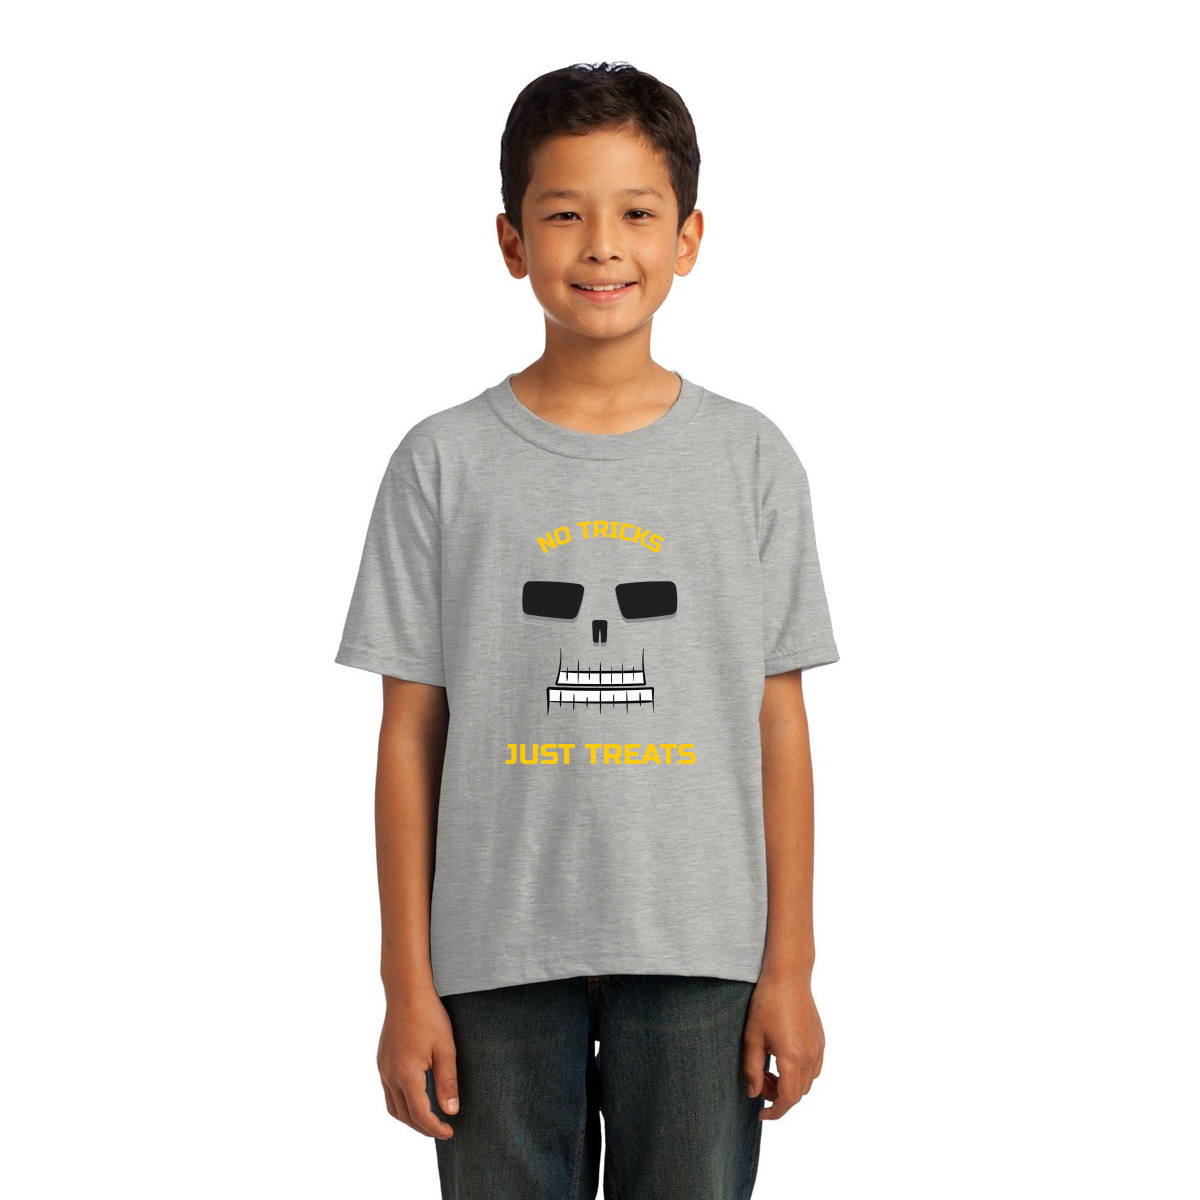 No Tricks Just Treats Kids T-shirt | Gray